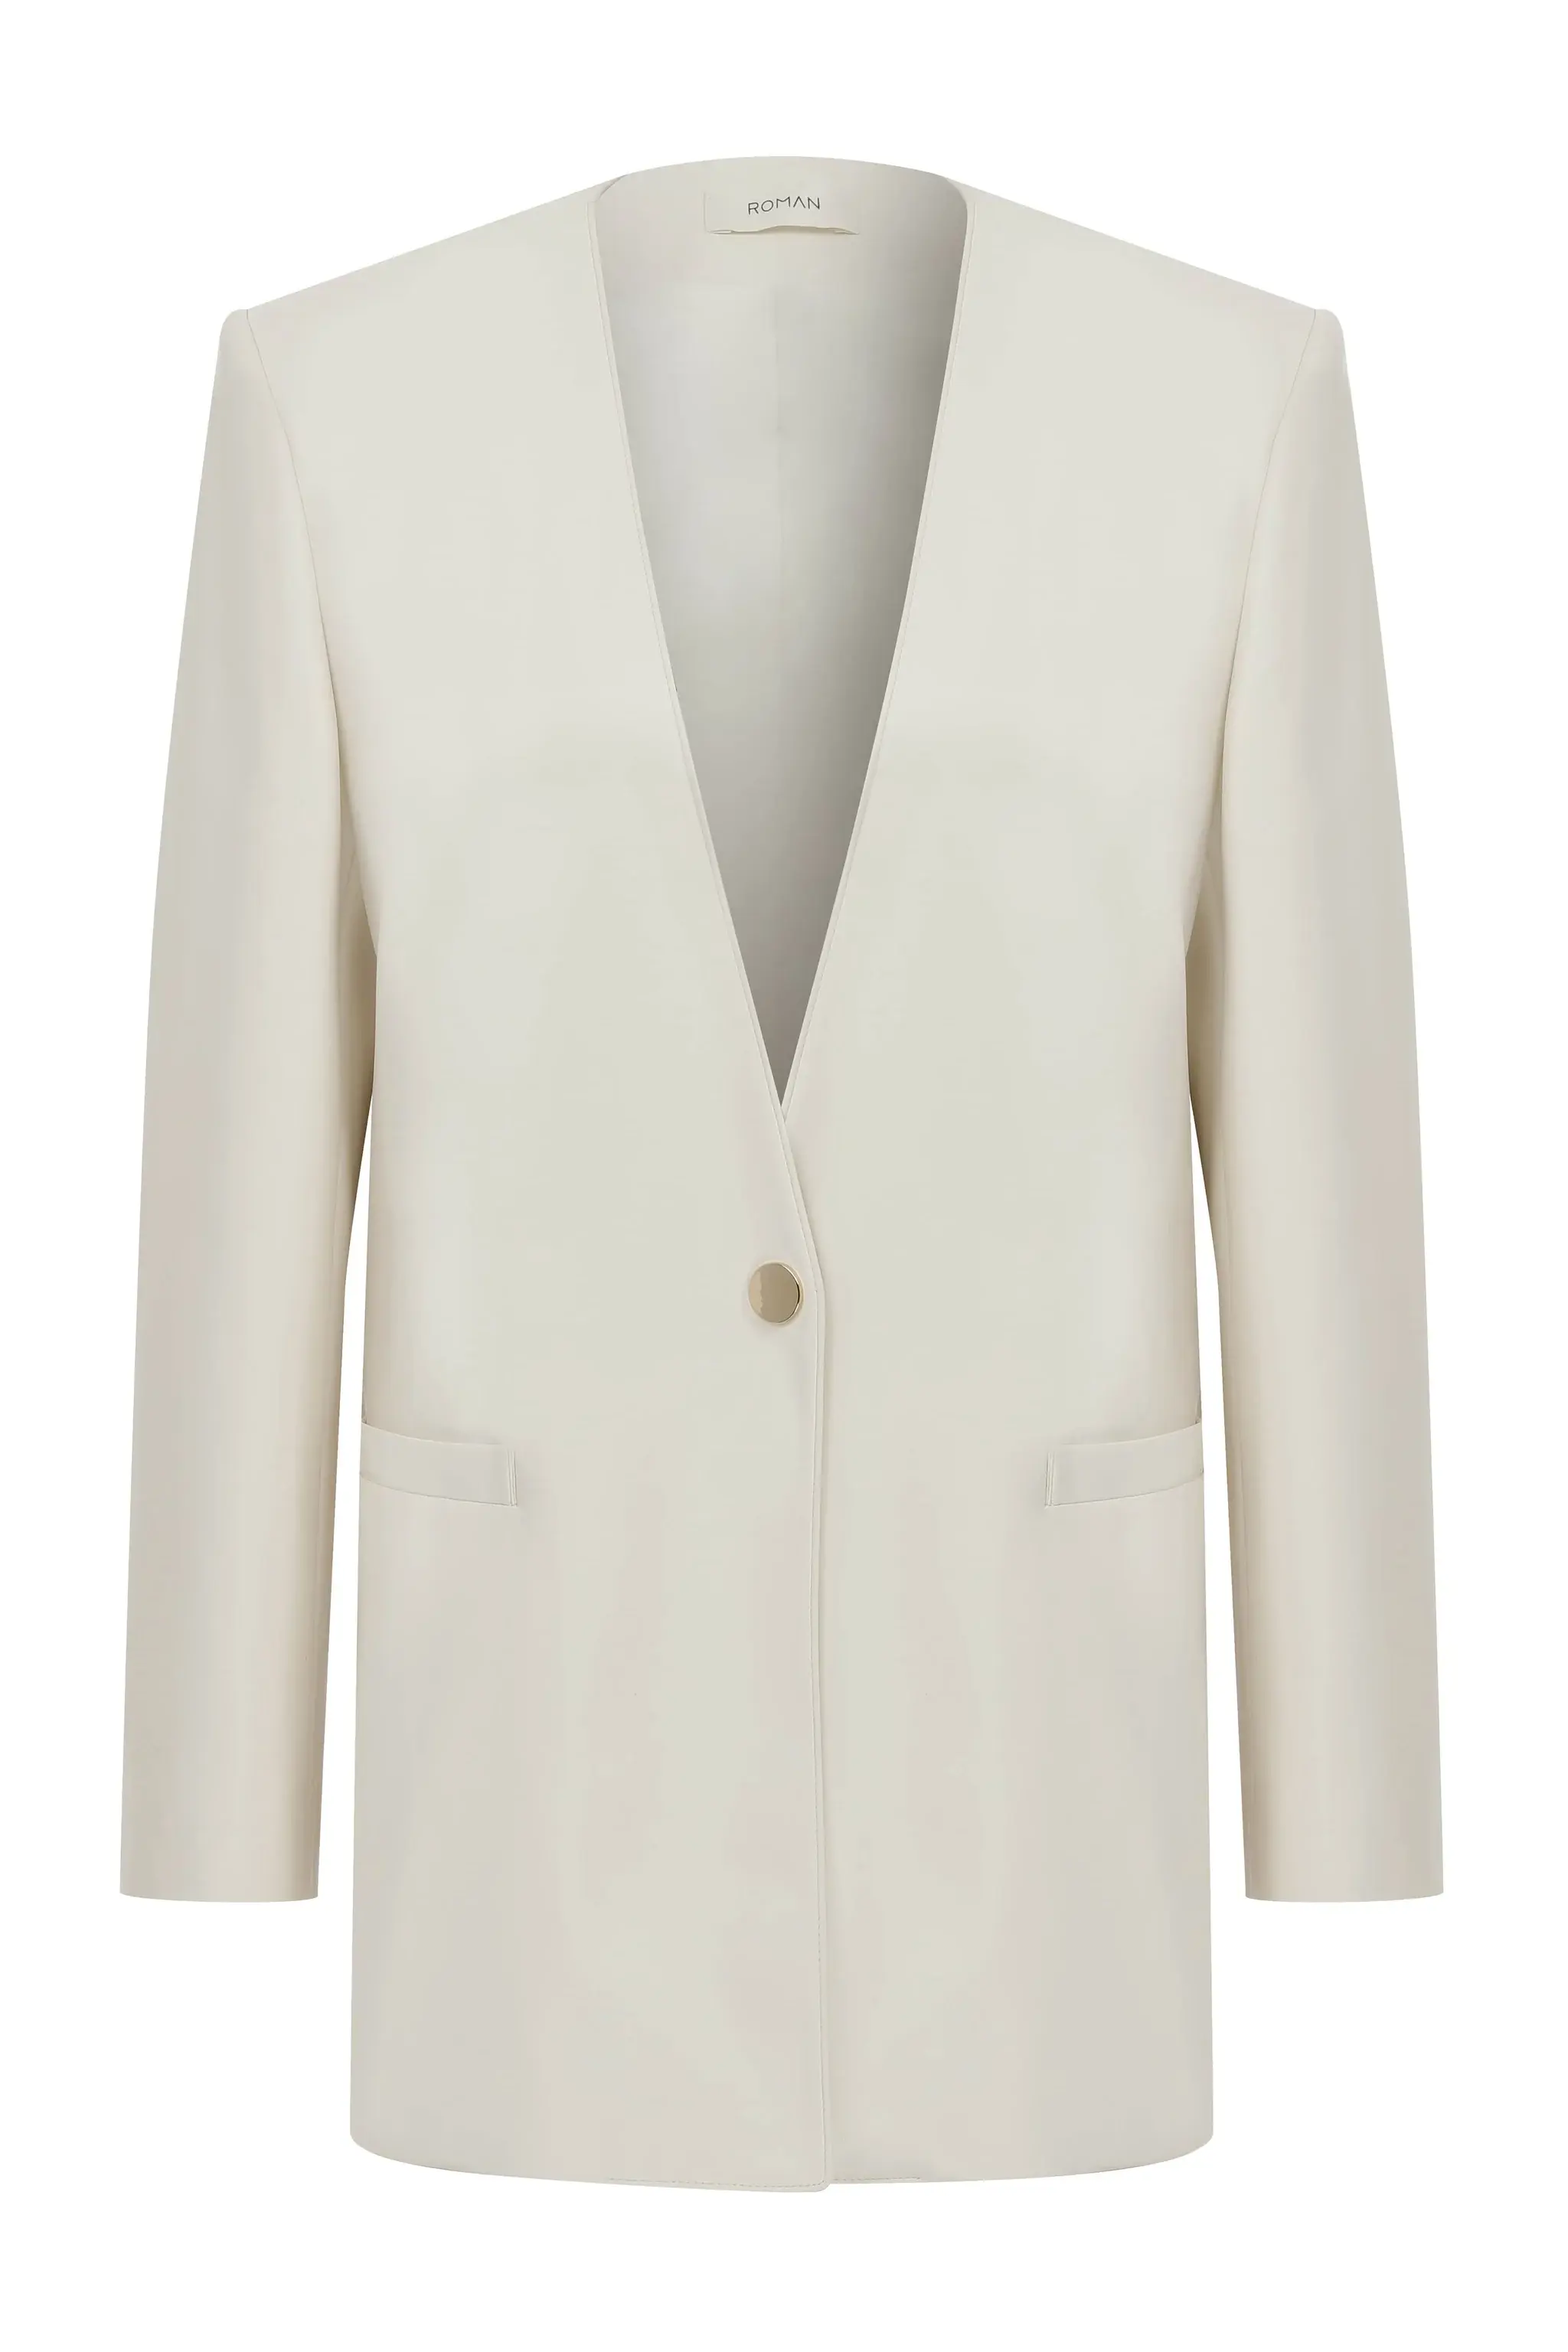 Roman Single Button Collarless Women's Jacket - 4 / White. 1